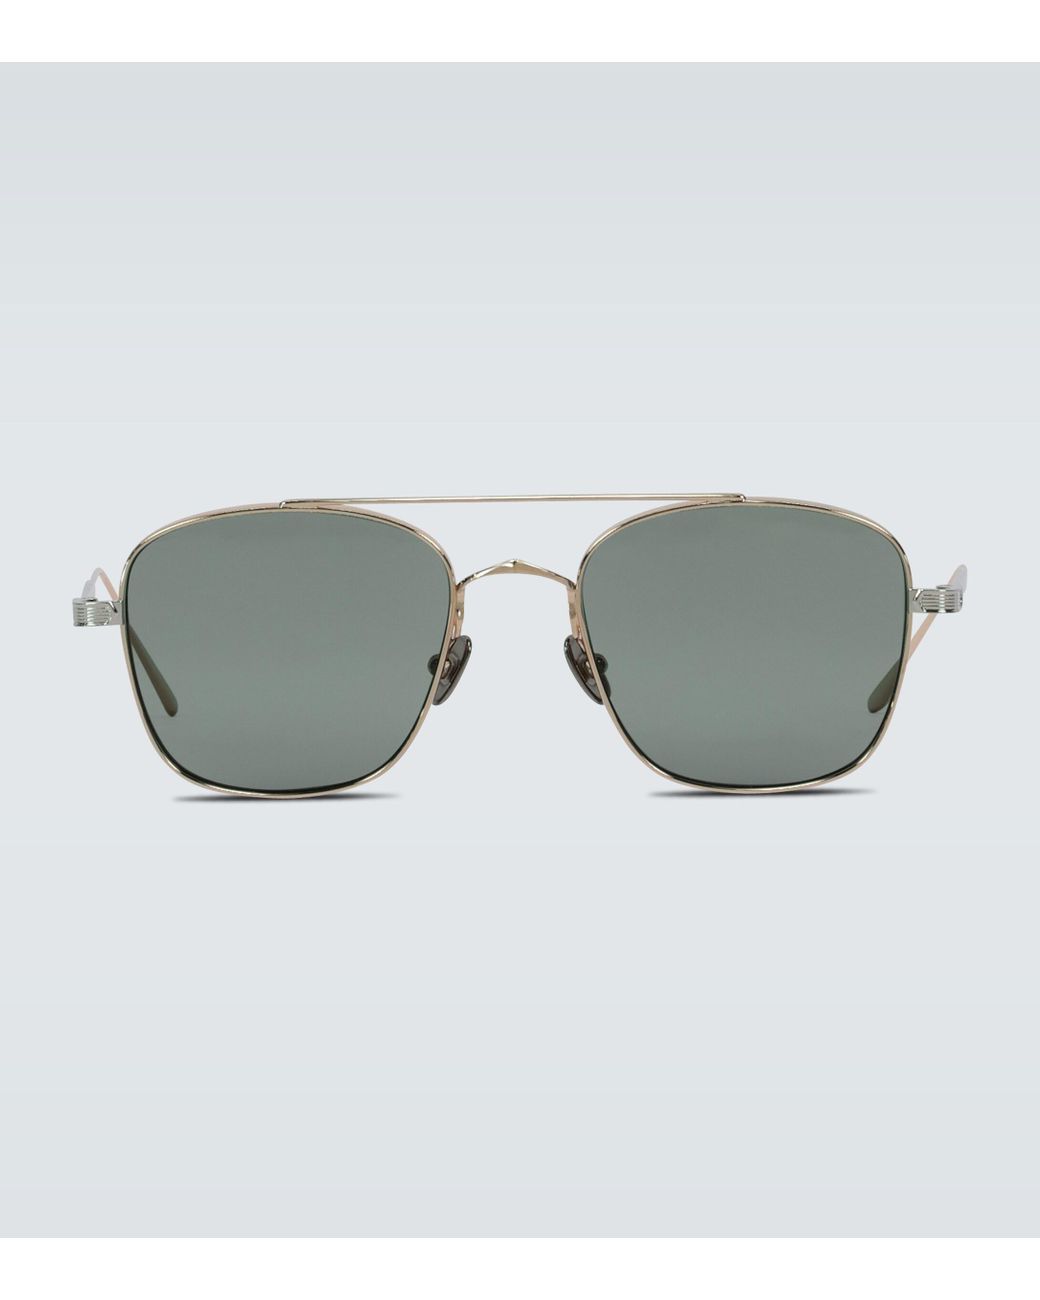 Cartier Square-framed Sunglasses in Gold (Metallic) for Men - Lyst